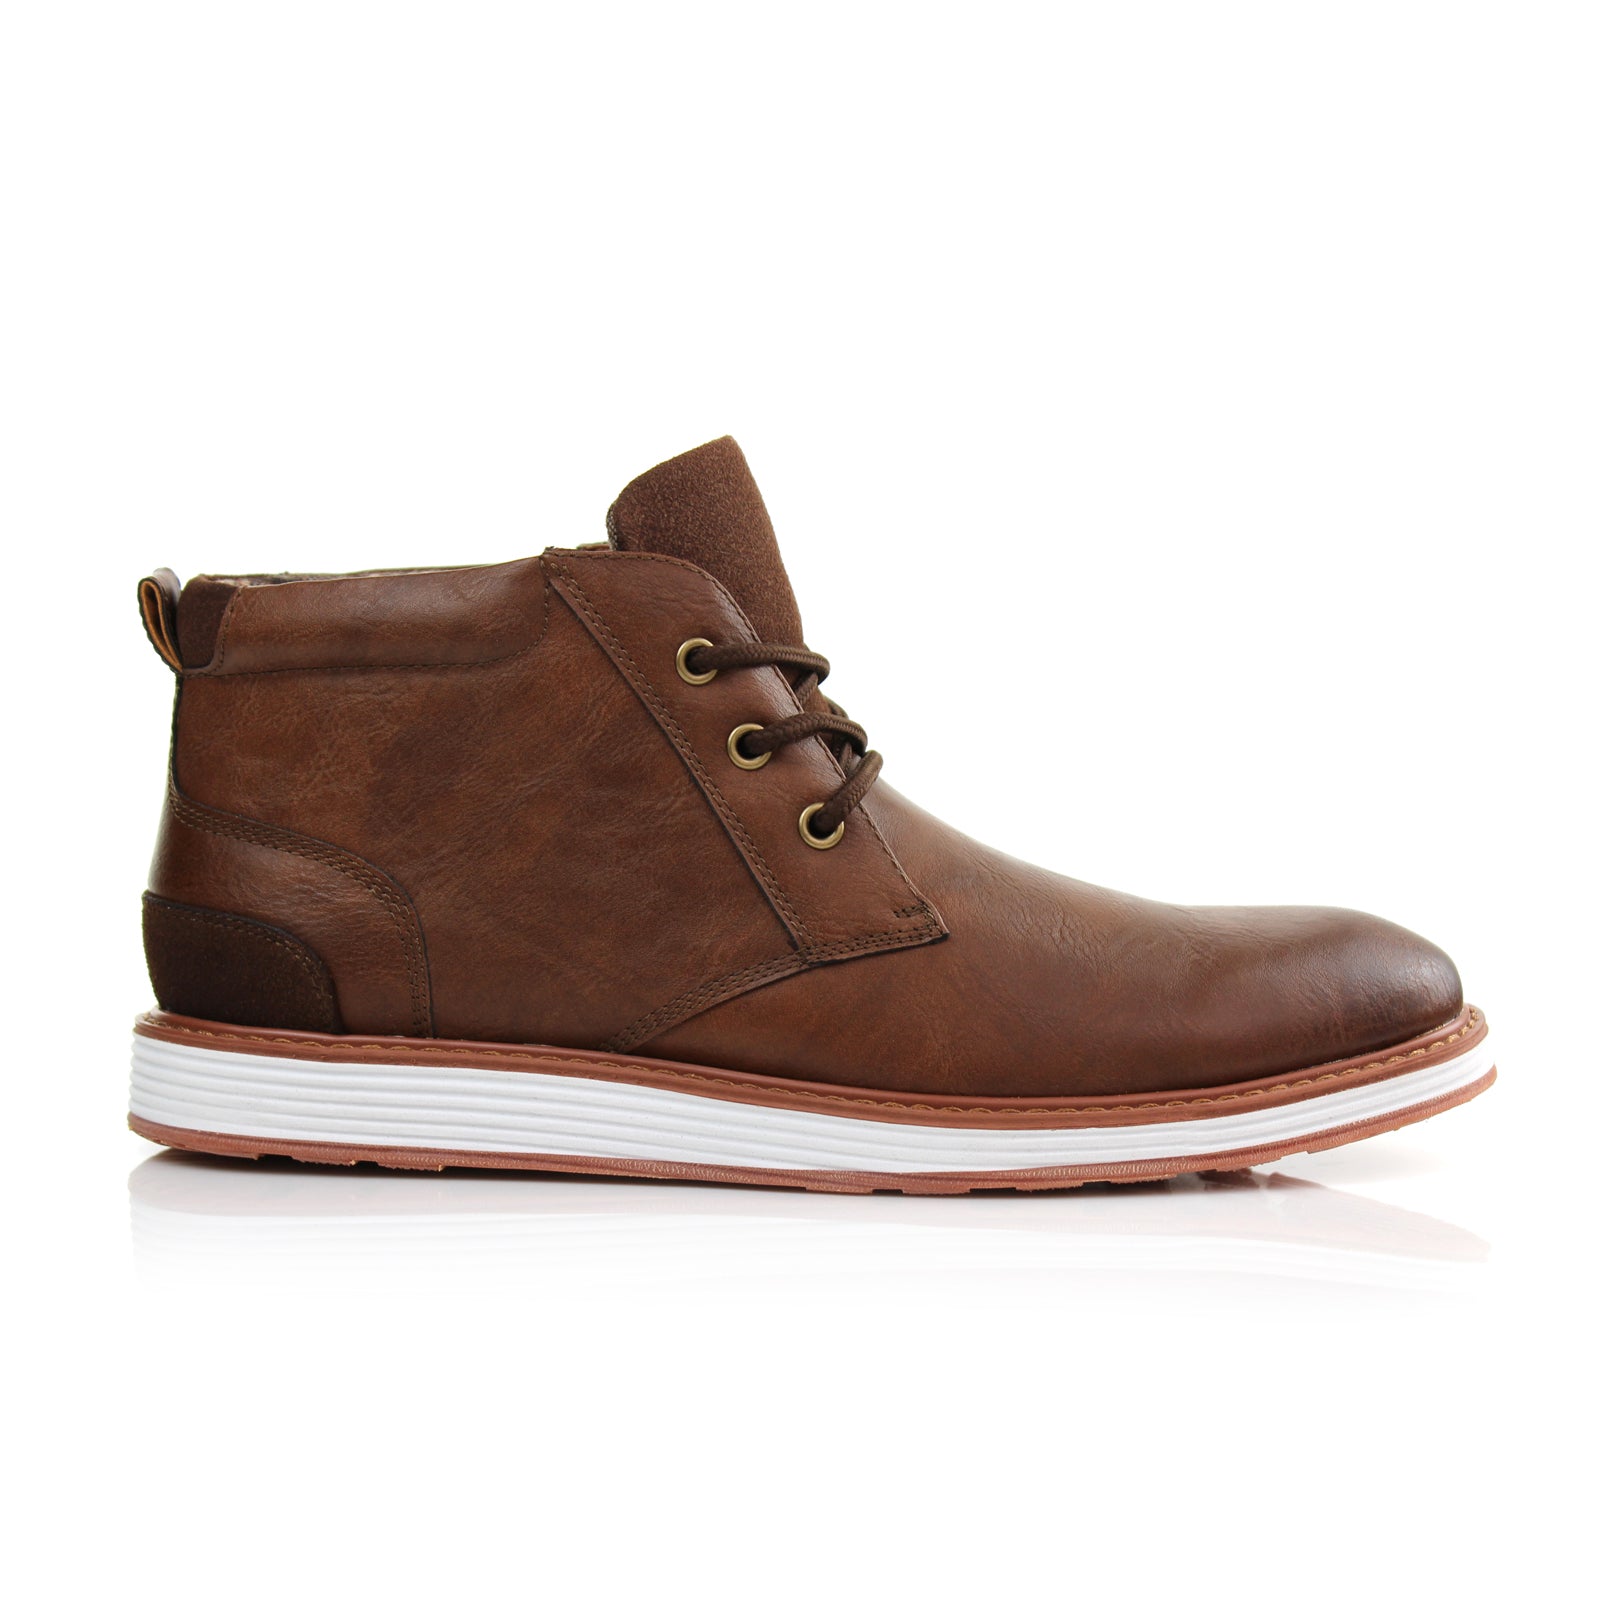 Sneaker Chukka Boots | Houstan by Ferro Aldo | Conal Footwear | Outer Side Angle View